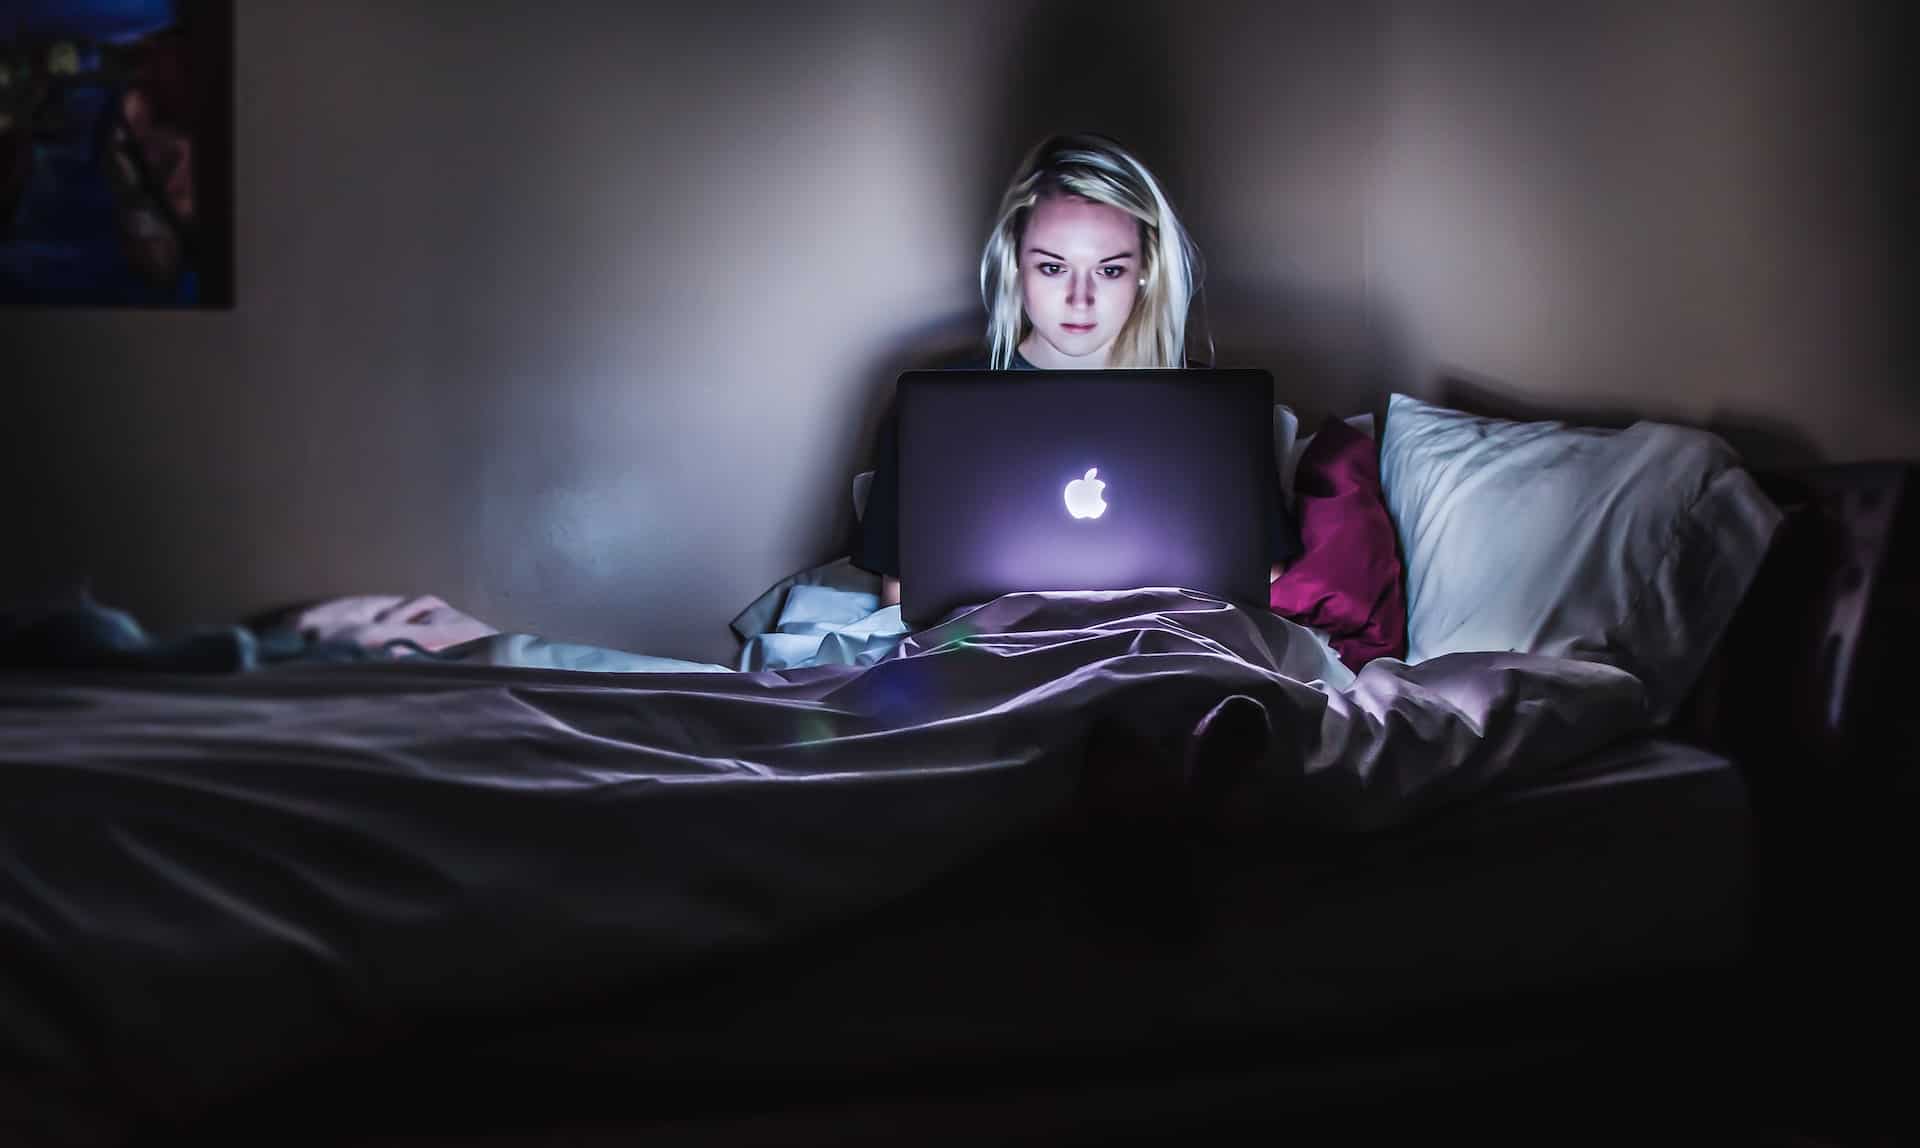 woman playing games on laptop at night